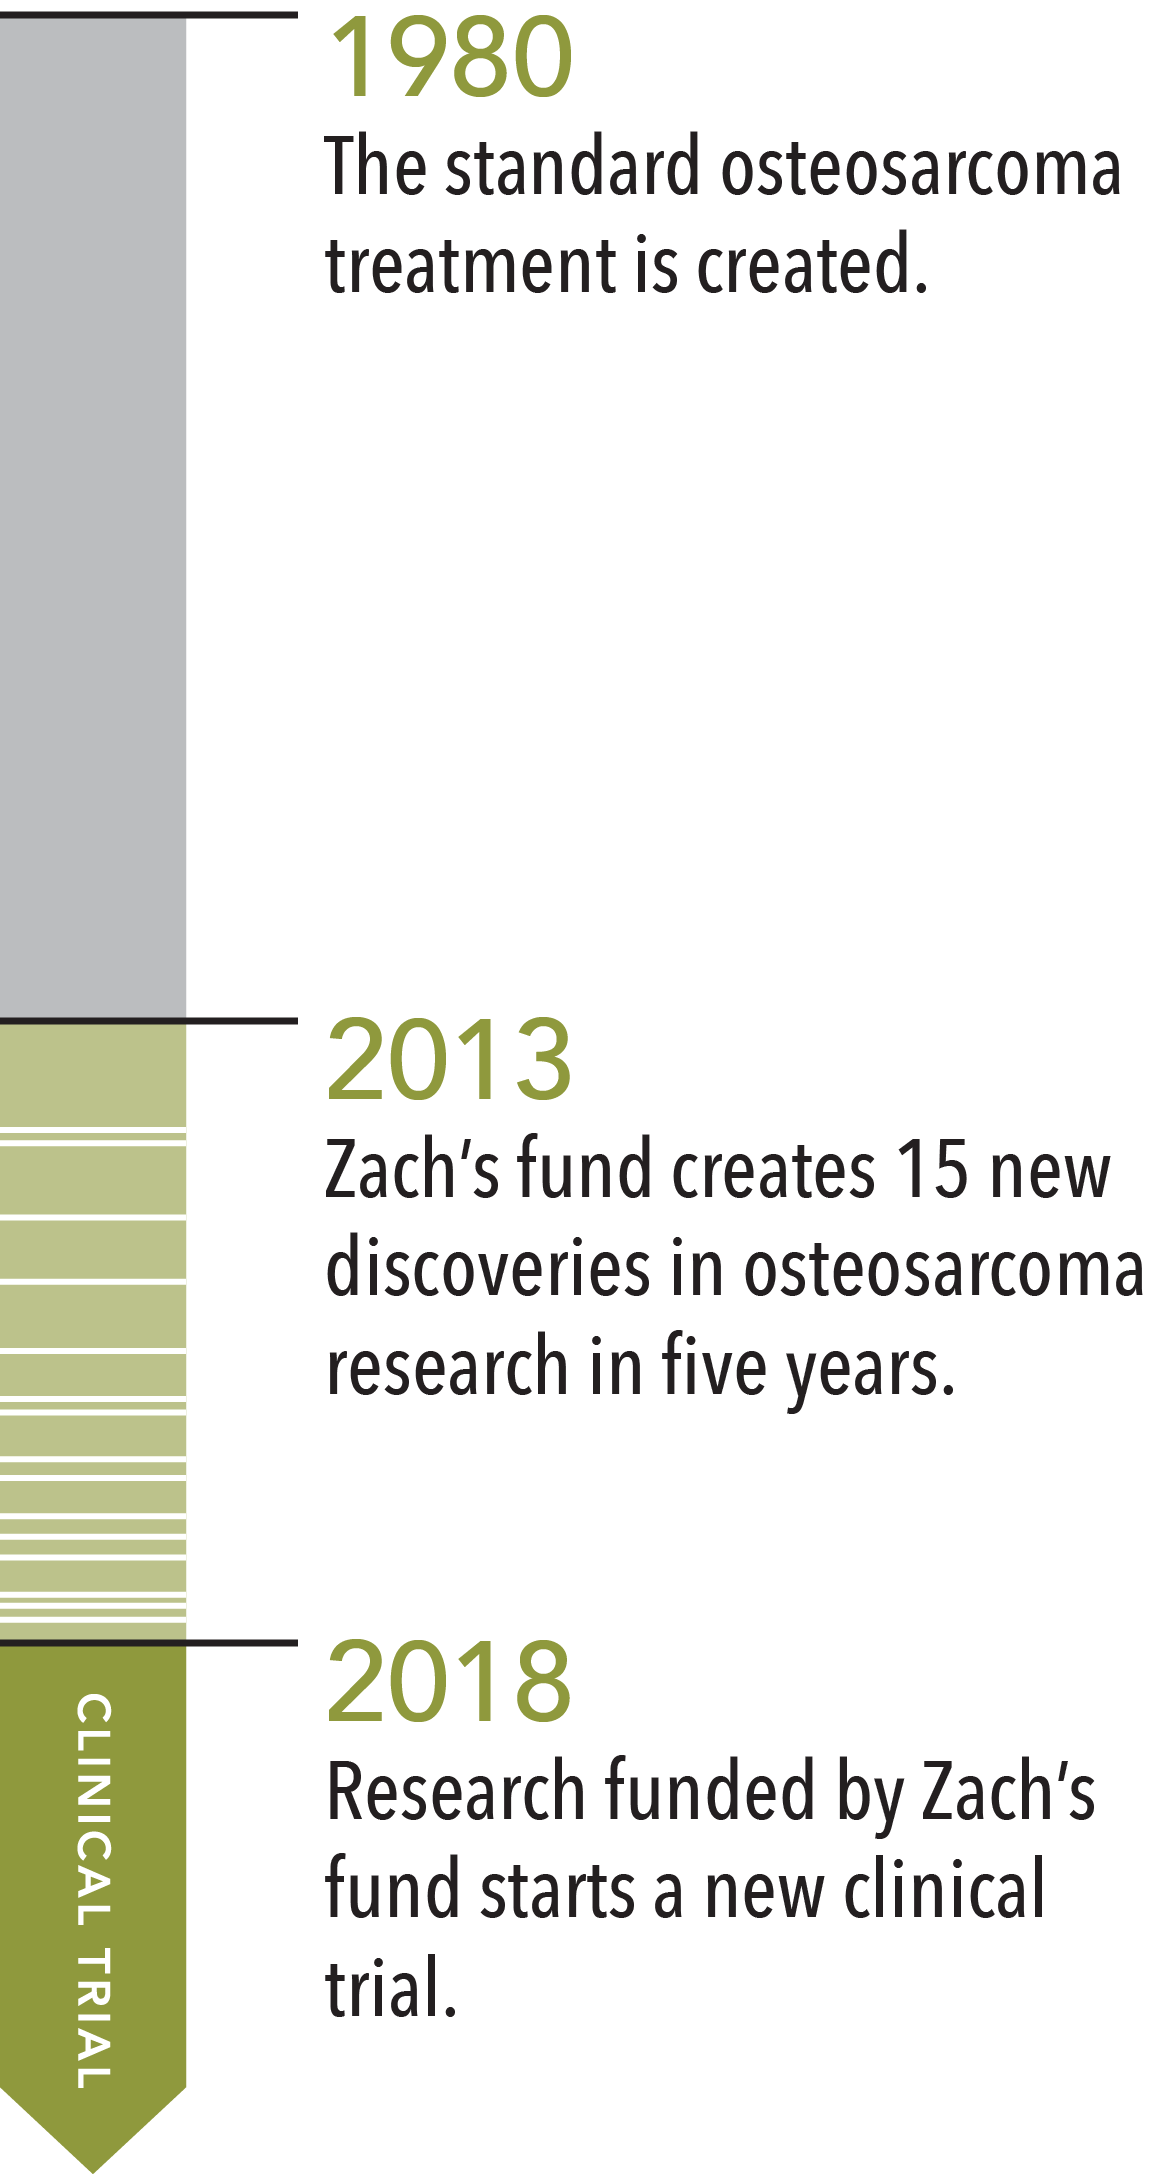 Timeline of Osteosarcoma Progress